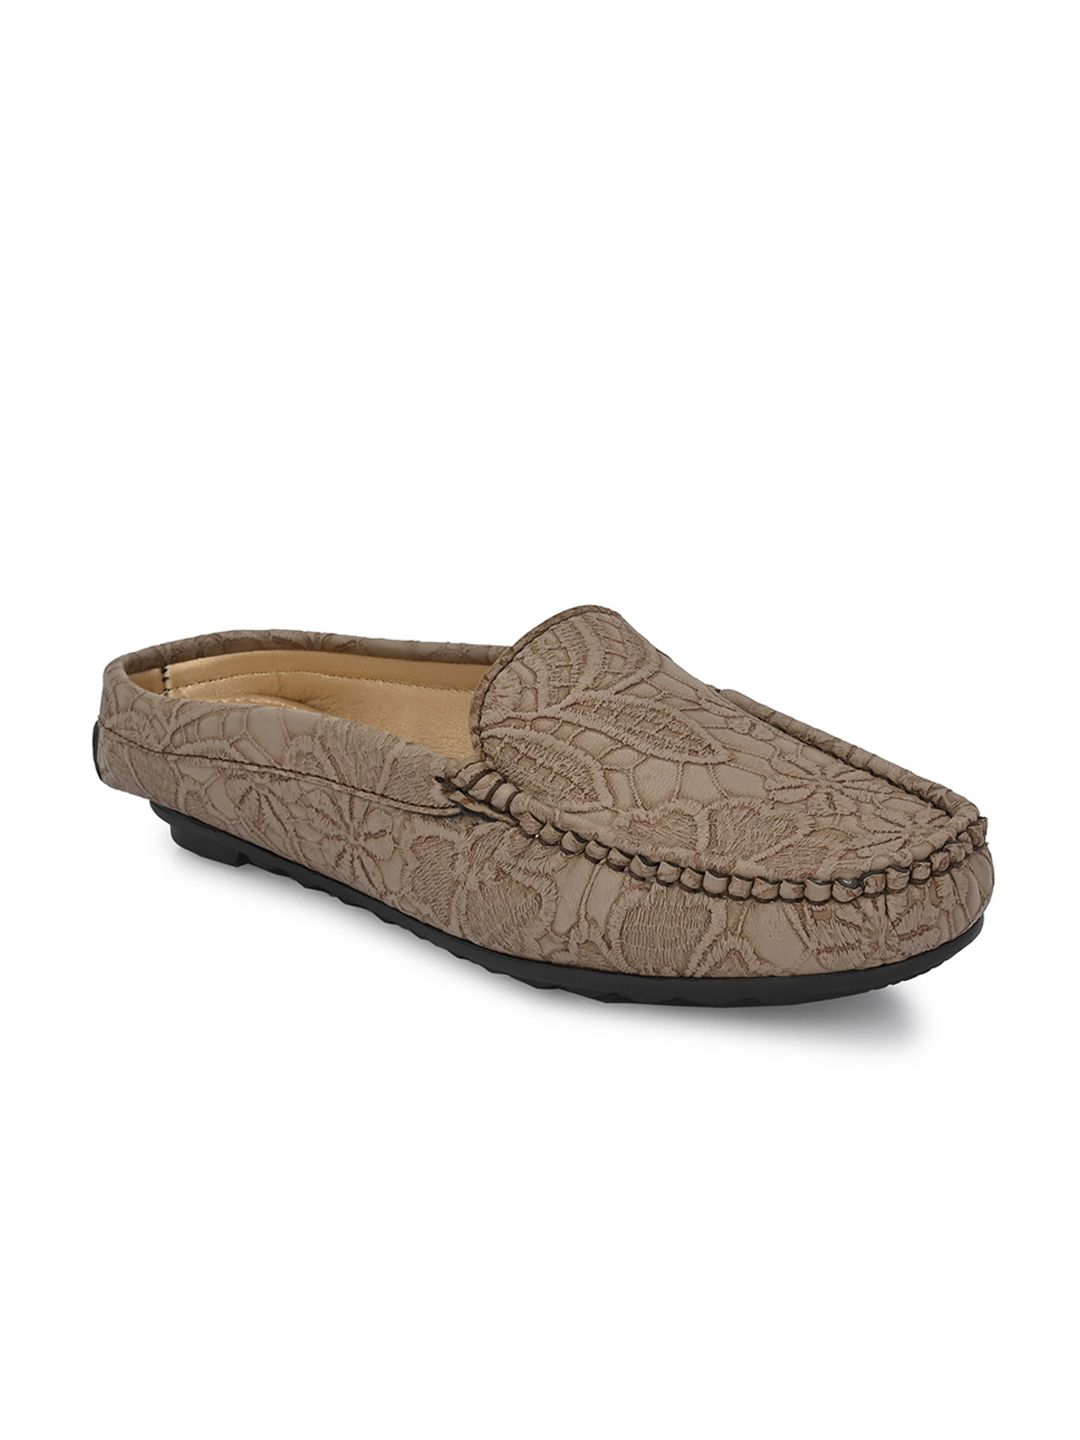 El Paso Women Tan Woven Design Loafers Price in India